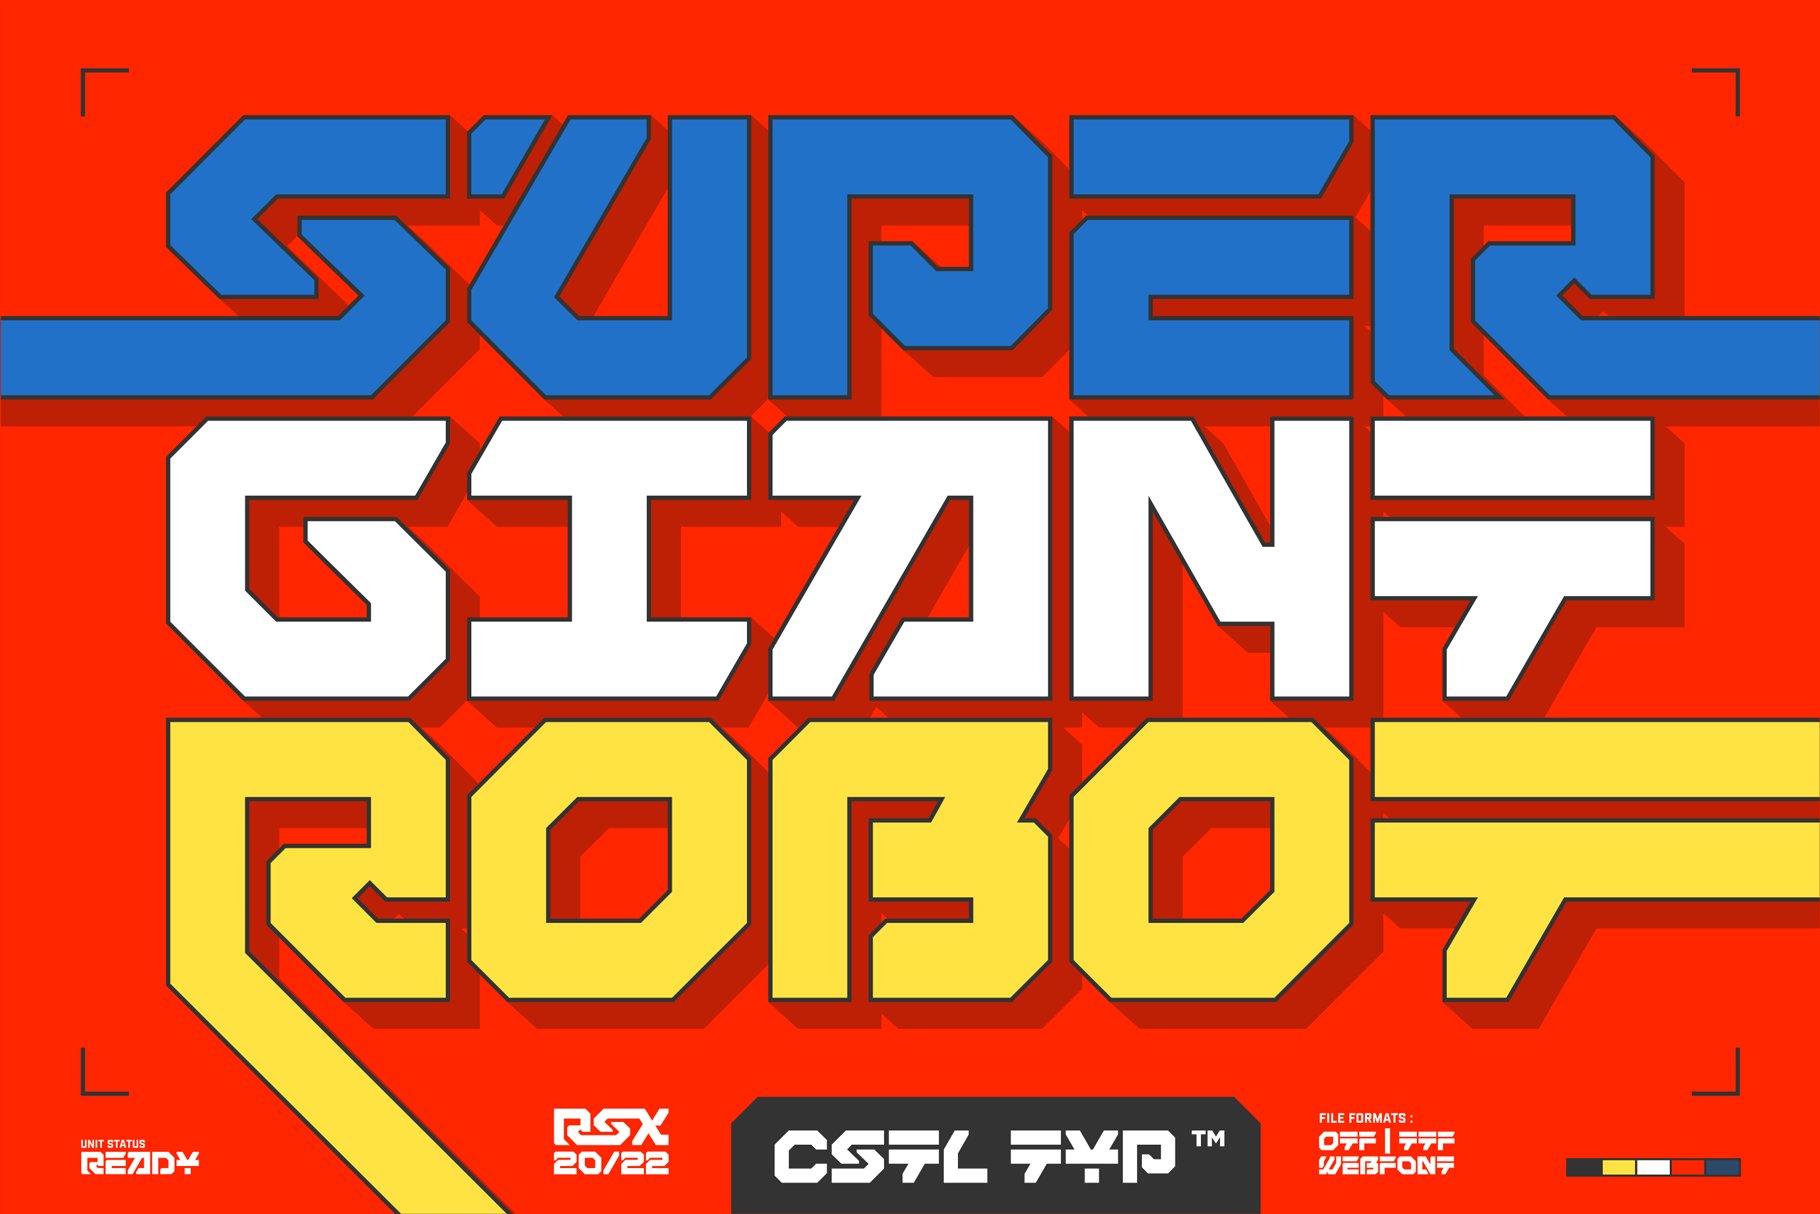 Super Giant Robot Font cover image.